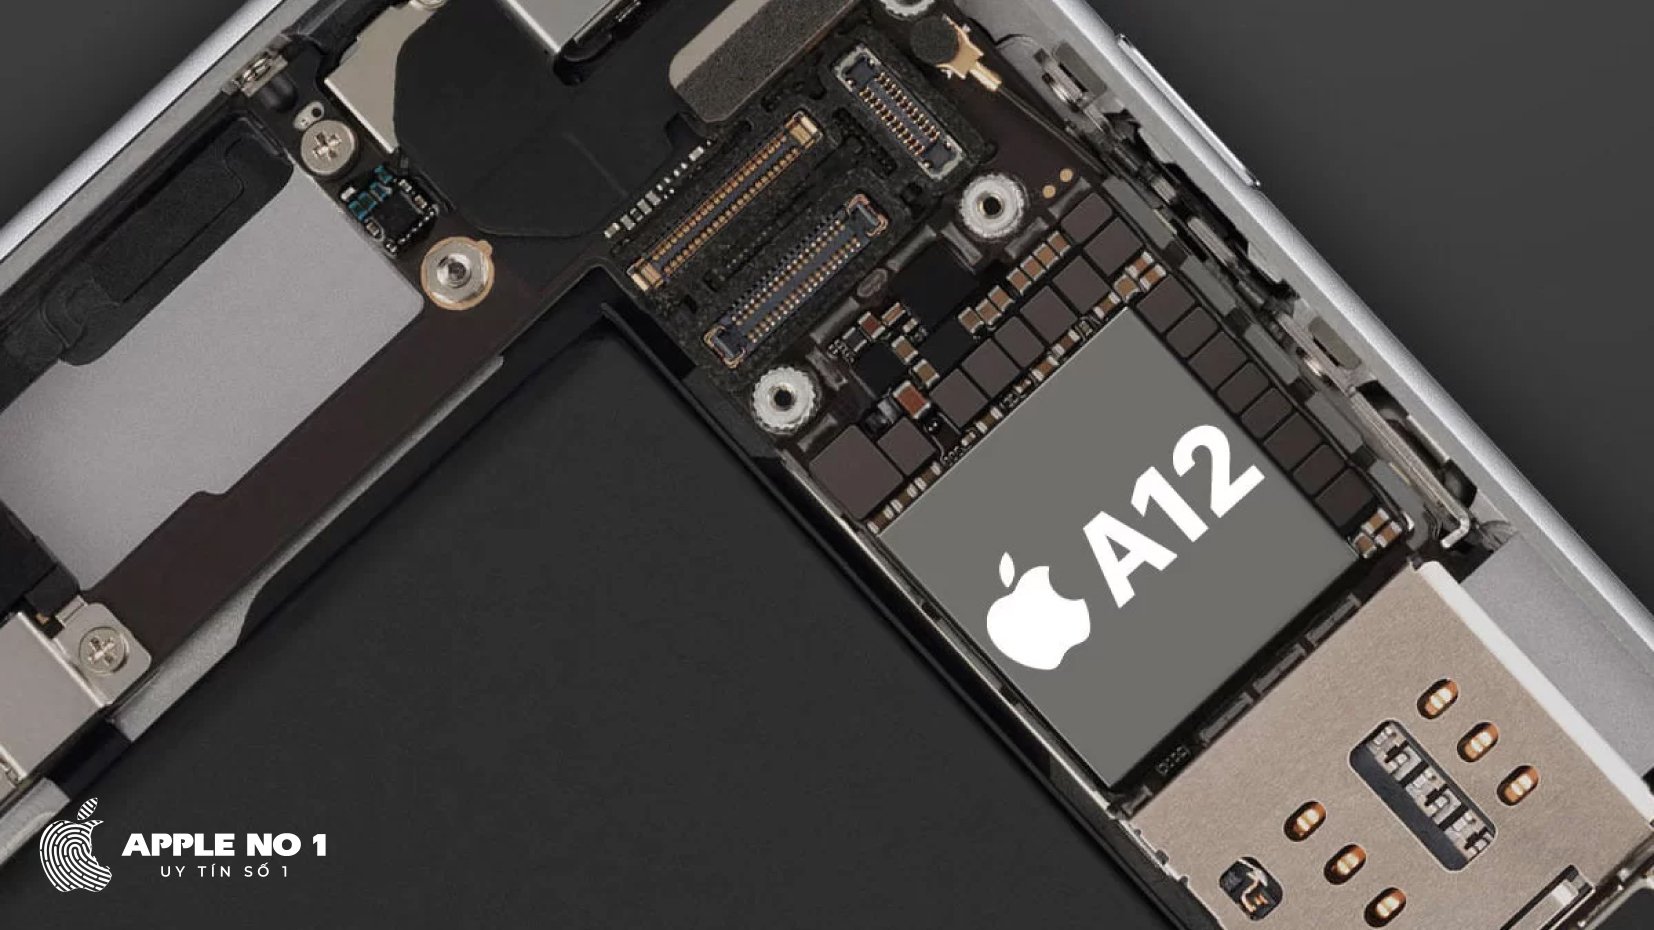 chipset apple a12 bionic tren iphone xr